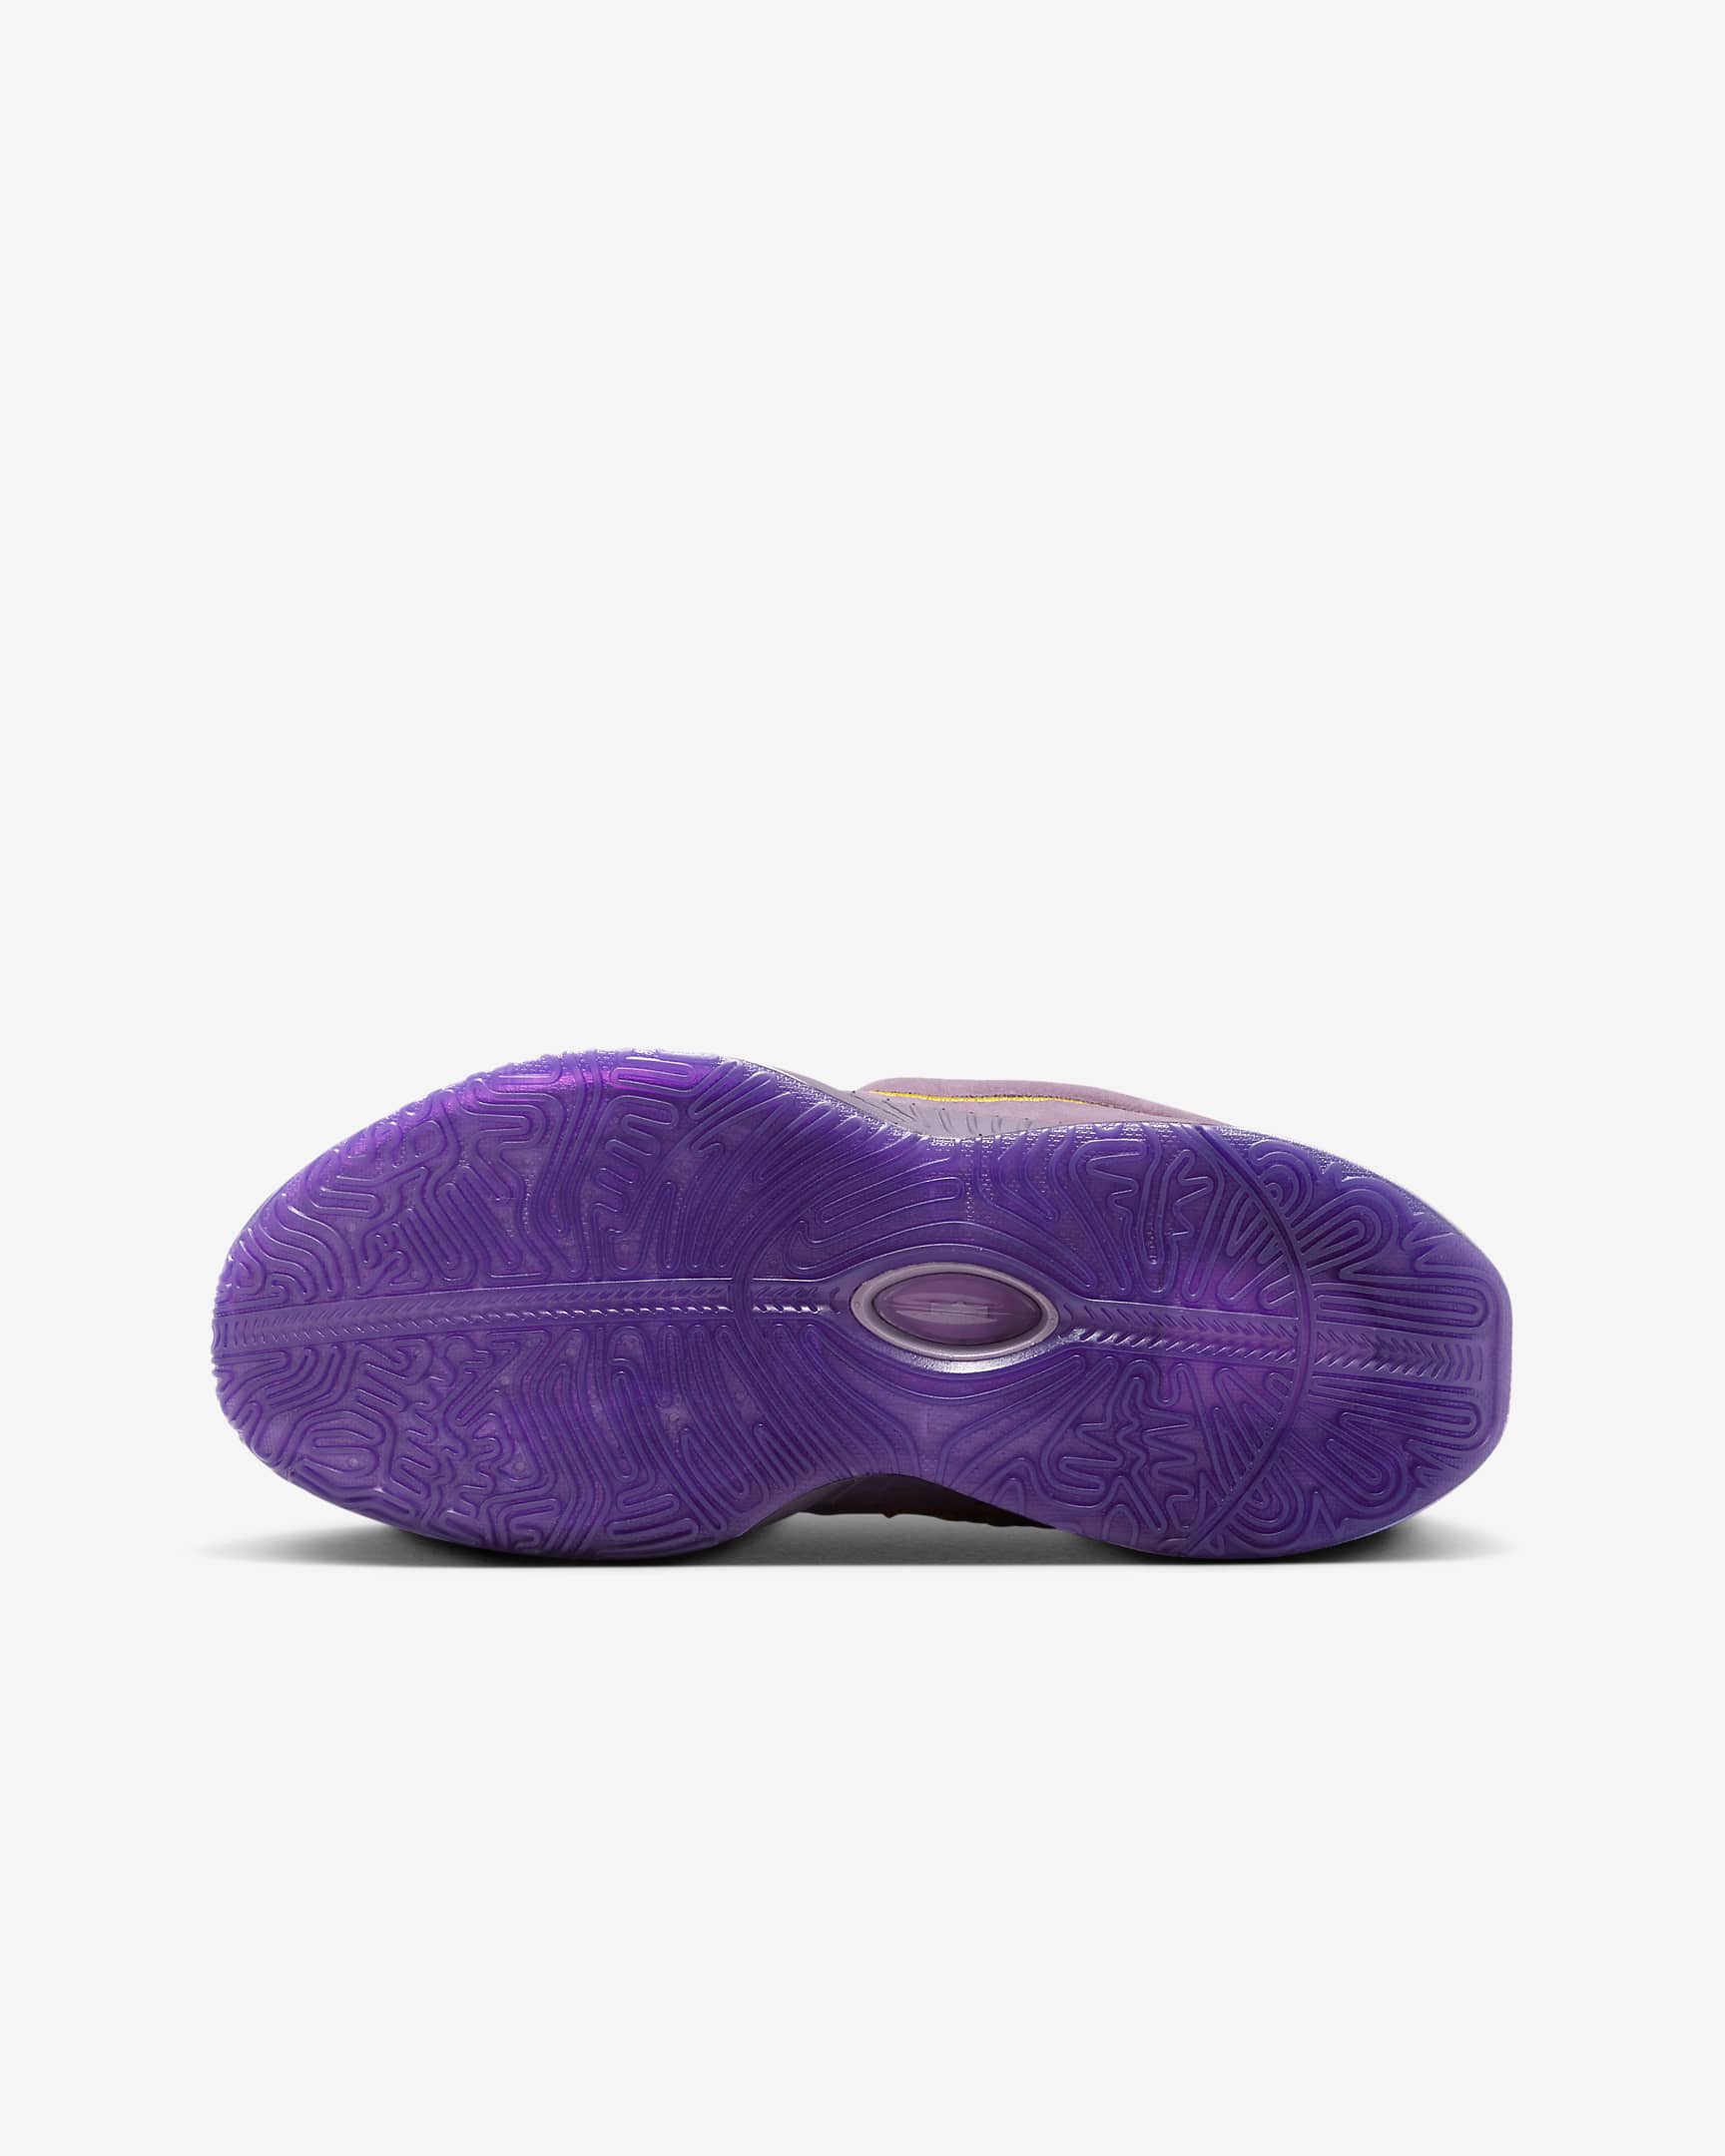 LeBron XXI 'Freshwater' Older Kids' Basketball Shoes - Violet Dust/Purple Cosmos/University Gold